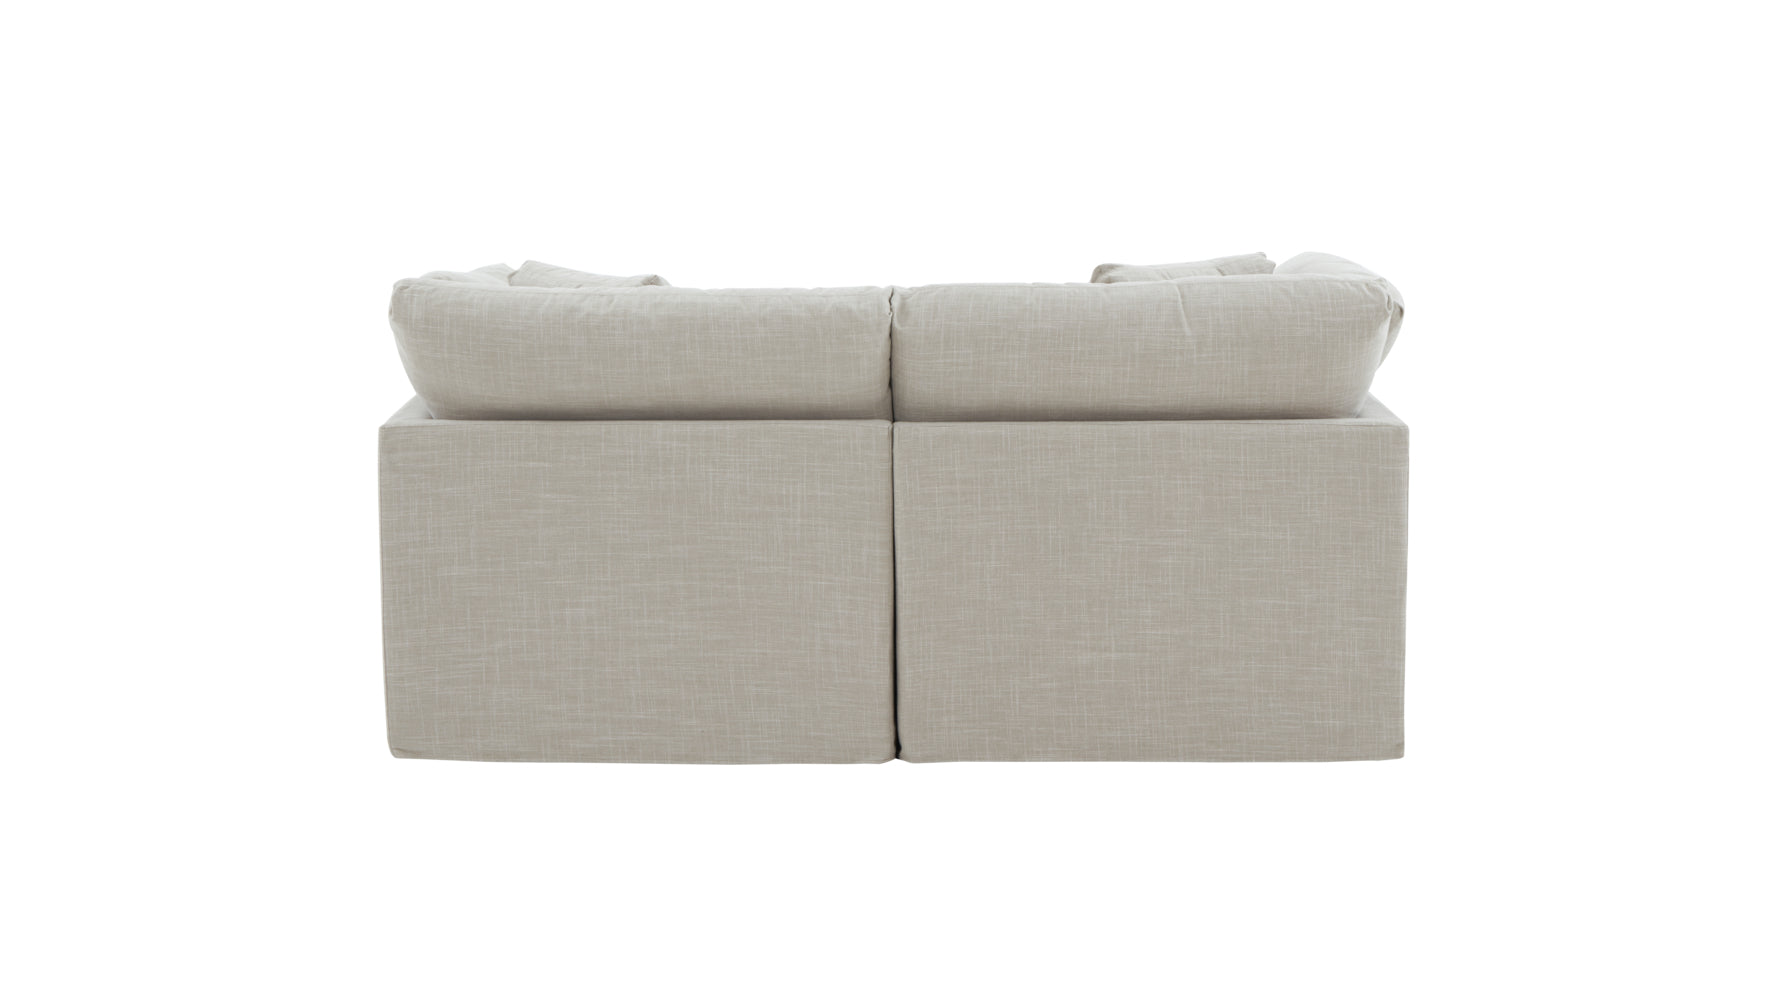 Get Together™ 2-Piece Modular Sofa, Standard, Light Pebble - Image 8